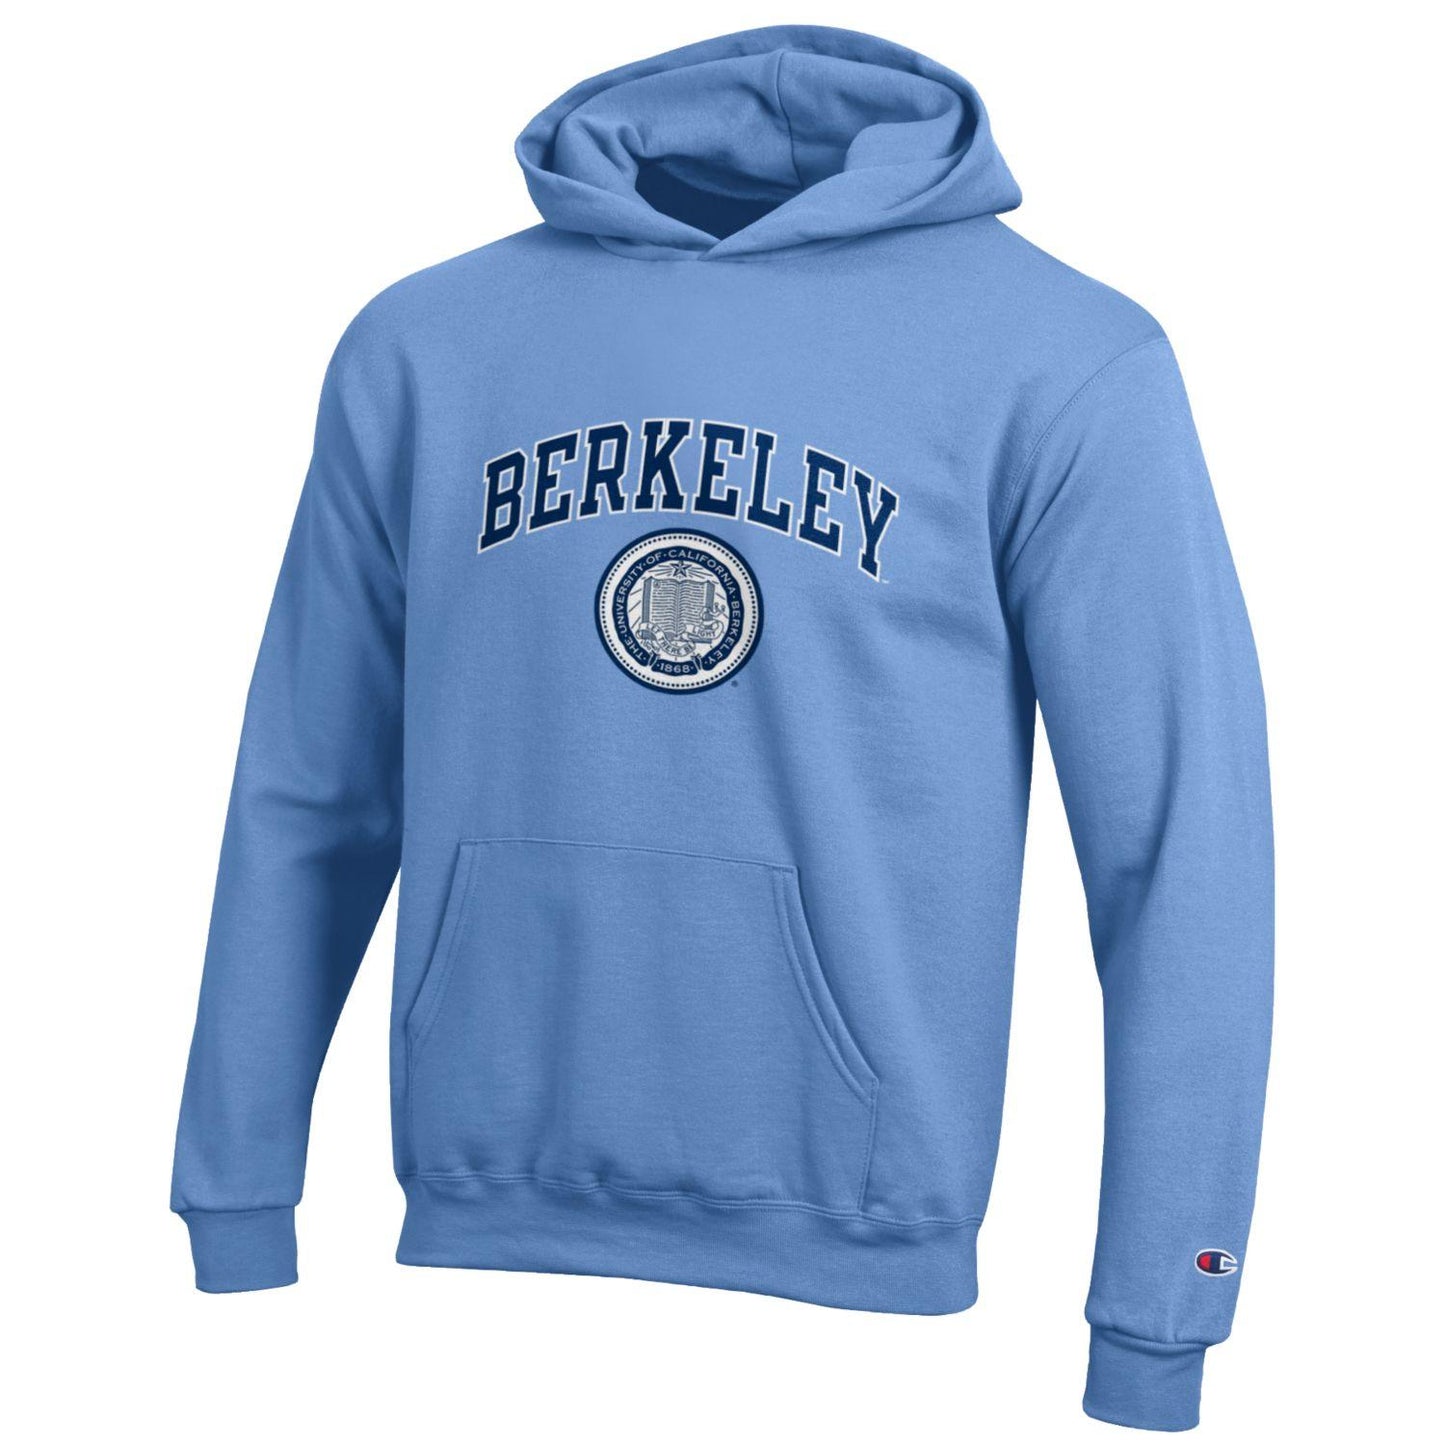 U.C. Berkeley arch and seal youth hoodie sweatshirt-Blue-Shop College Wear